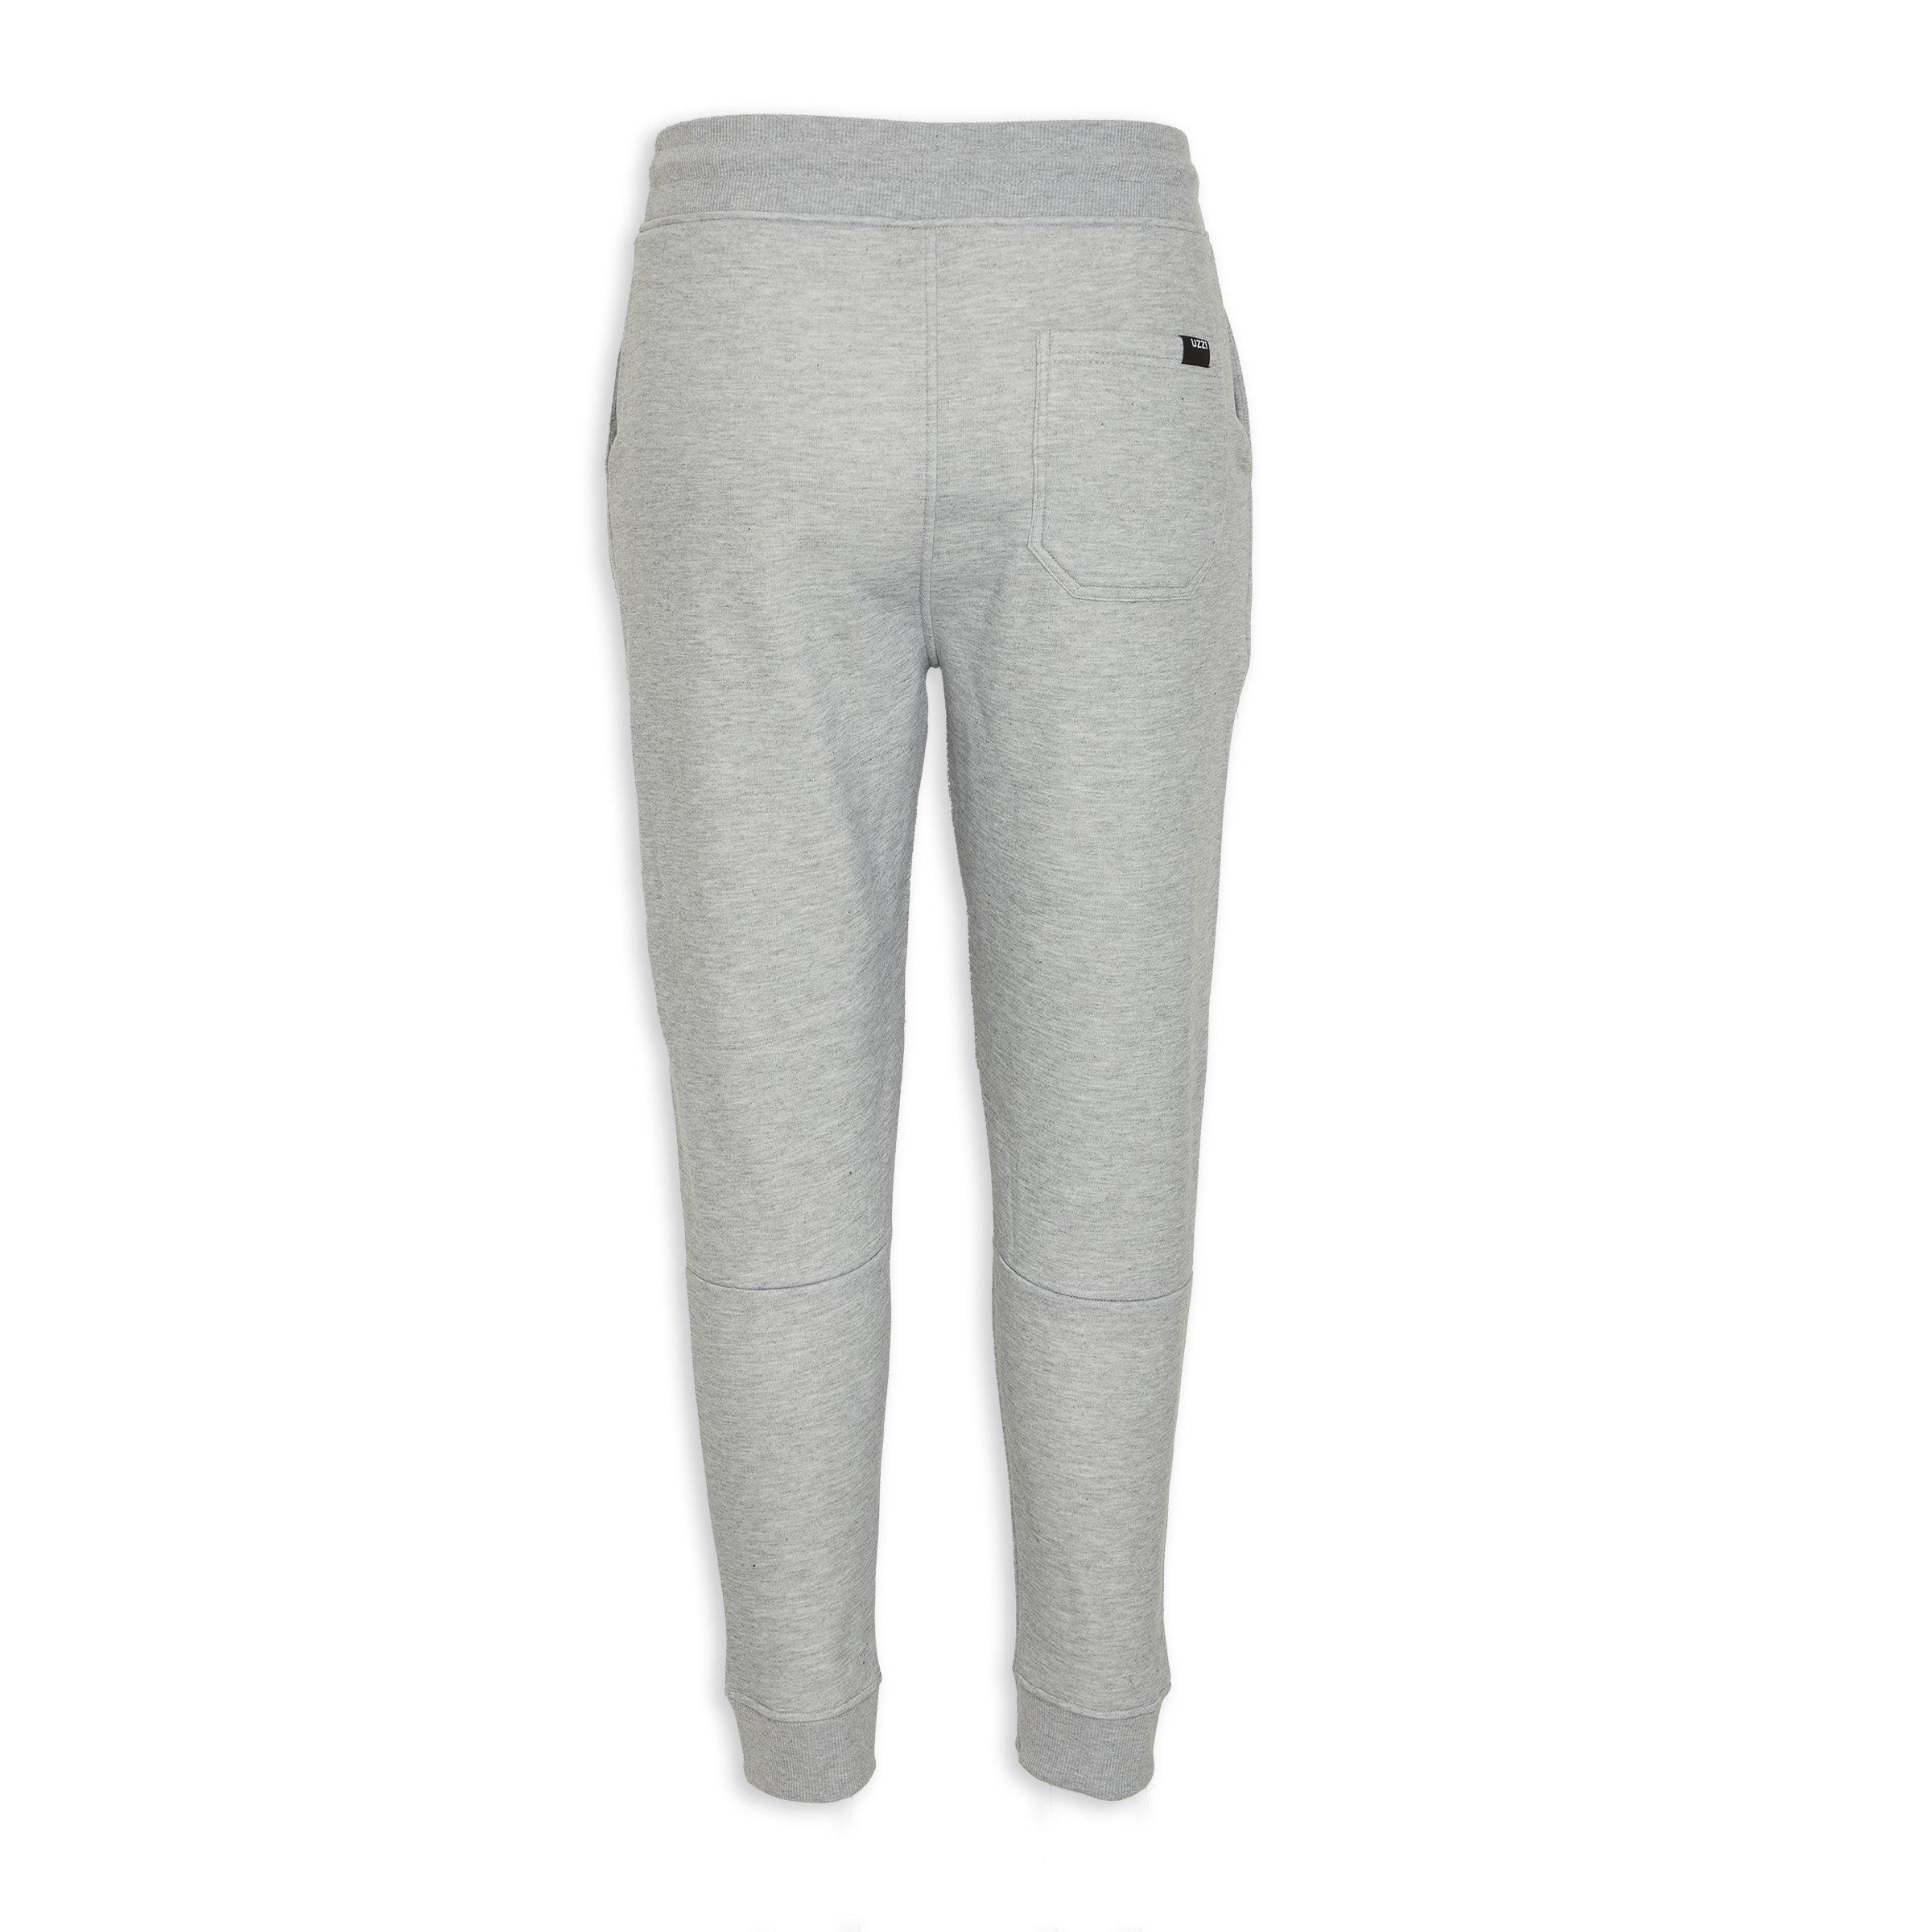 04651/ A TRIP IN A BAG flannel jogger pants 'Smart Joggpant Flan' grey